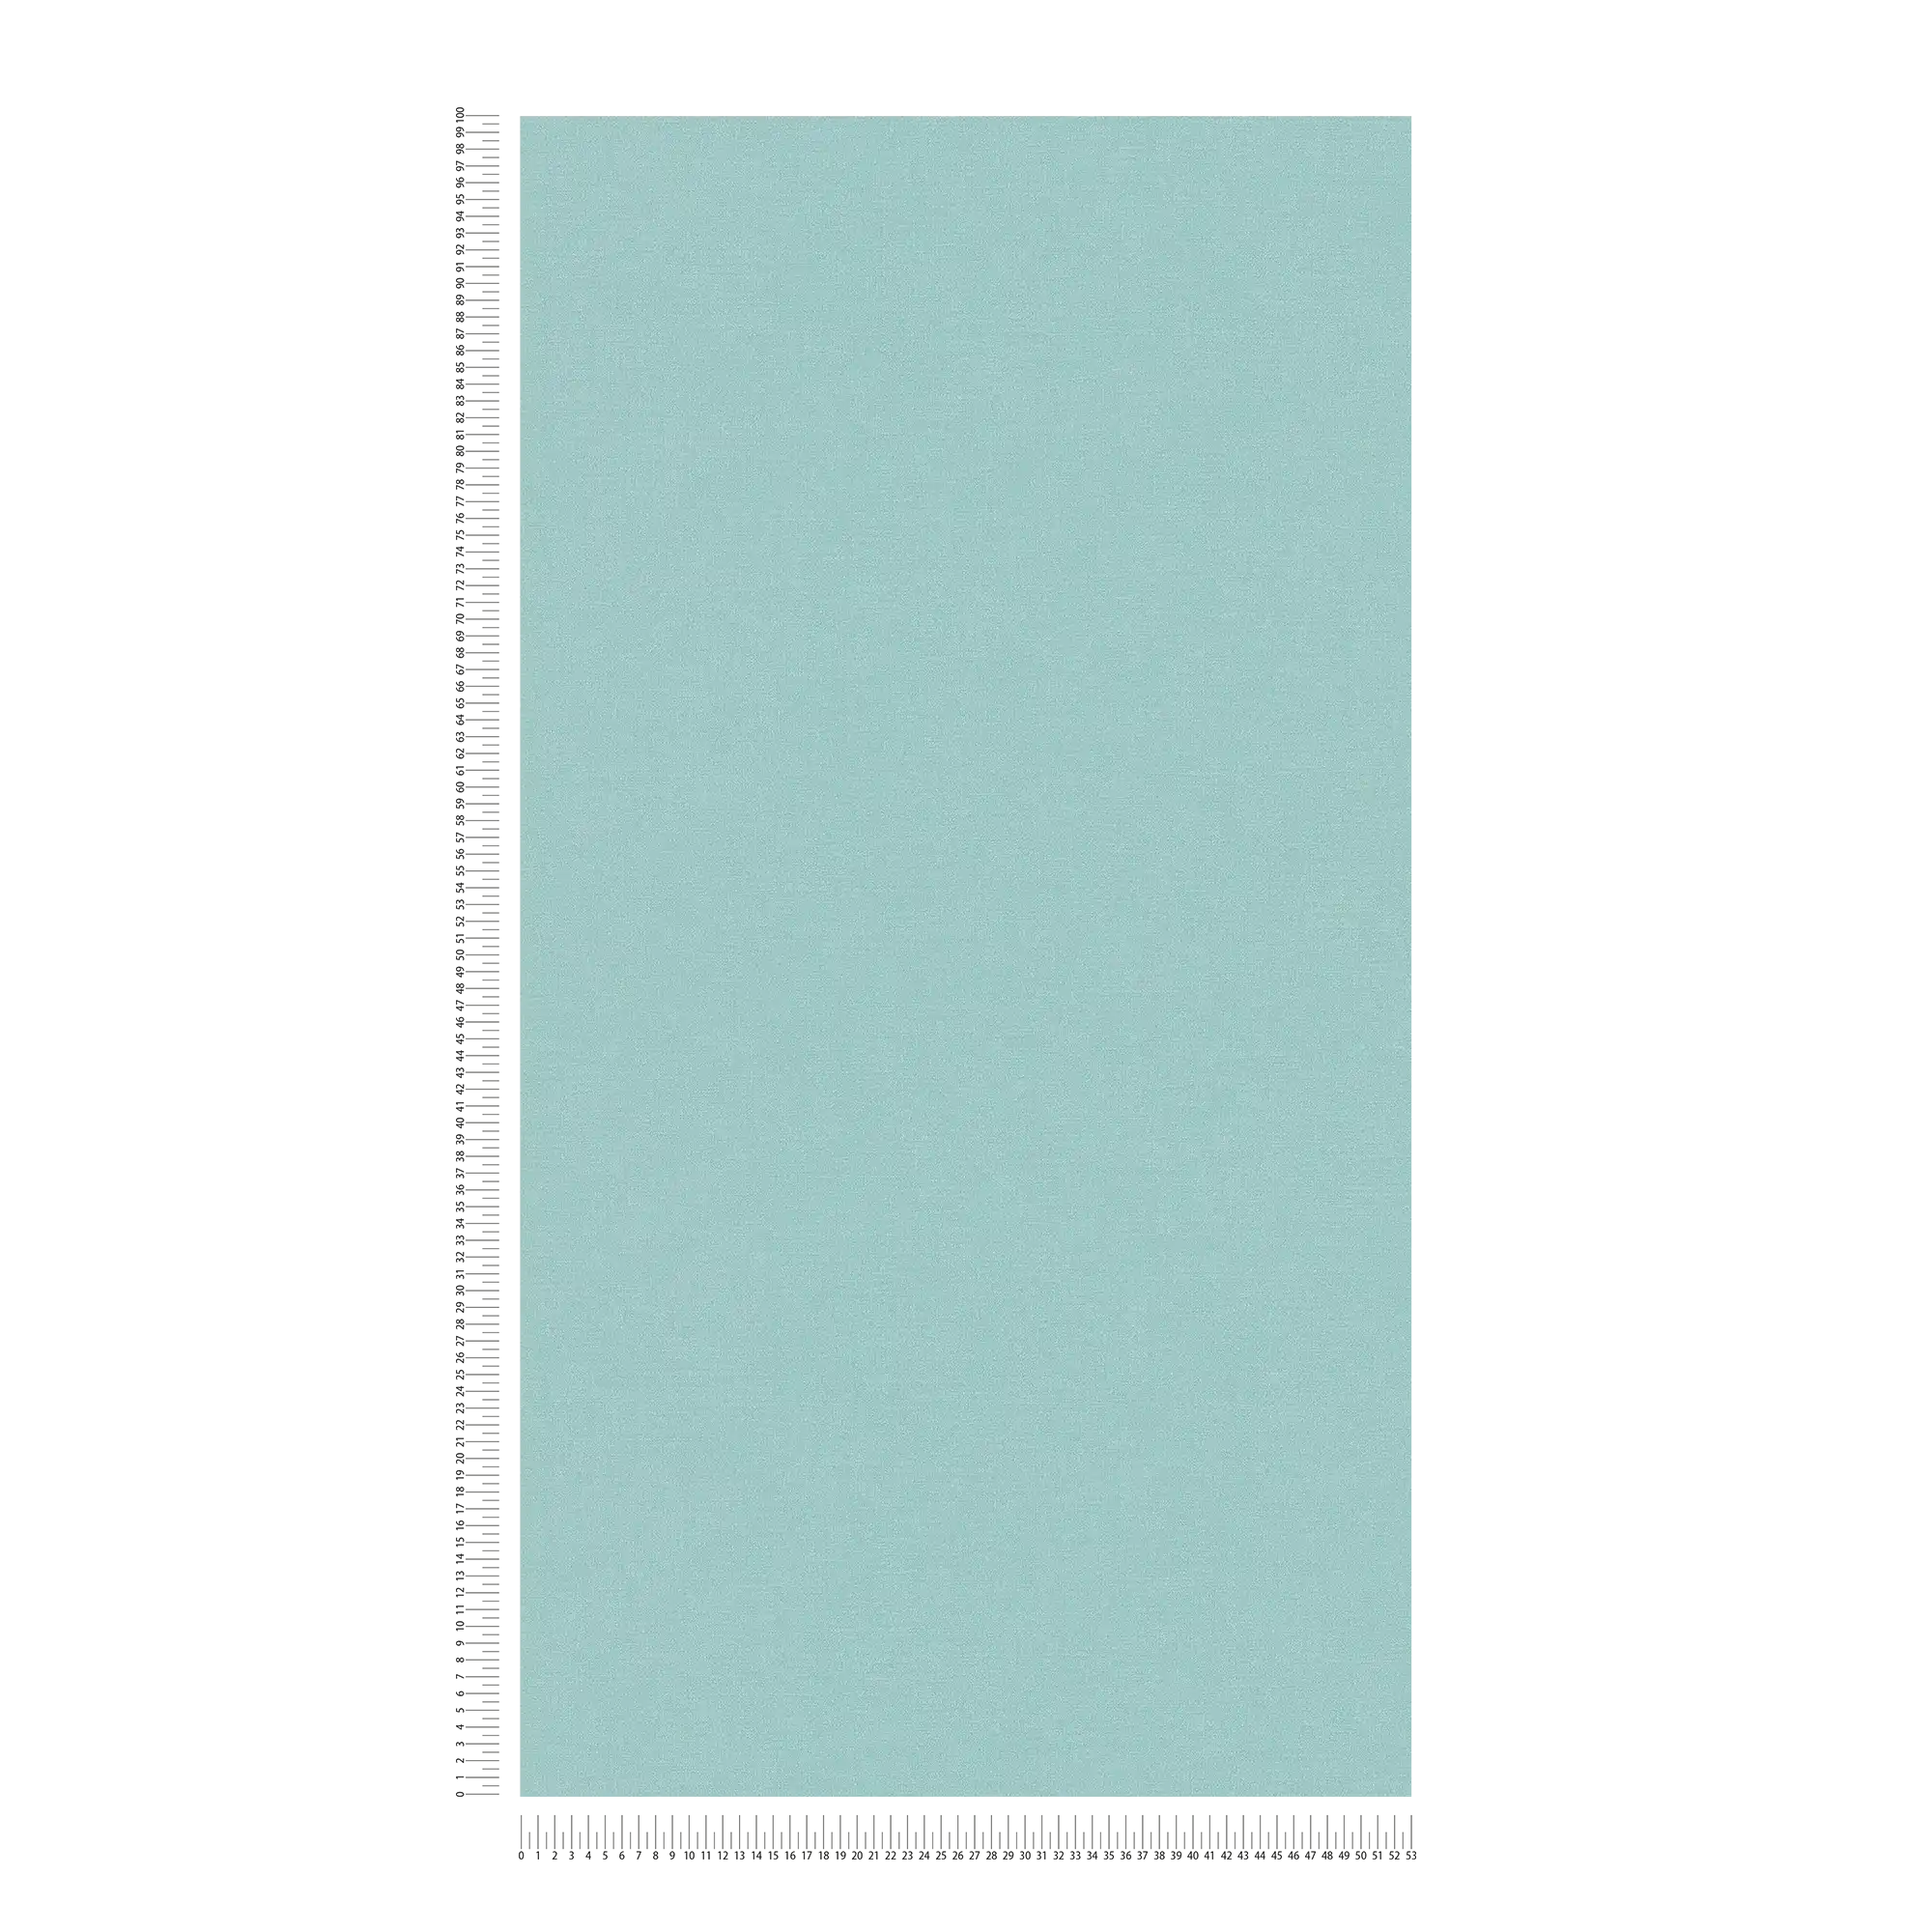             Papier peint intissé uni au look marin - turquoise
        